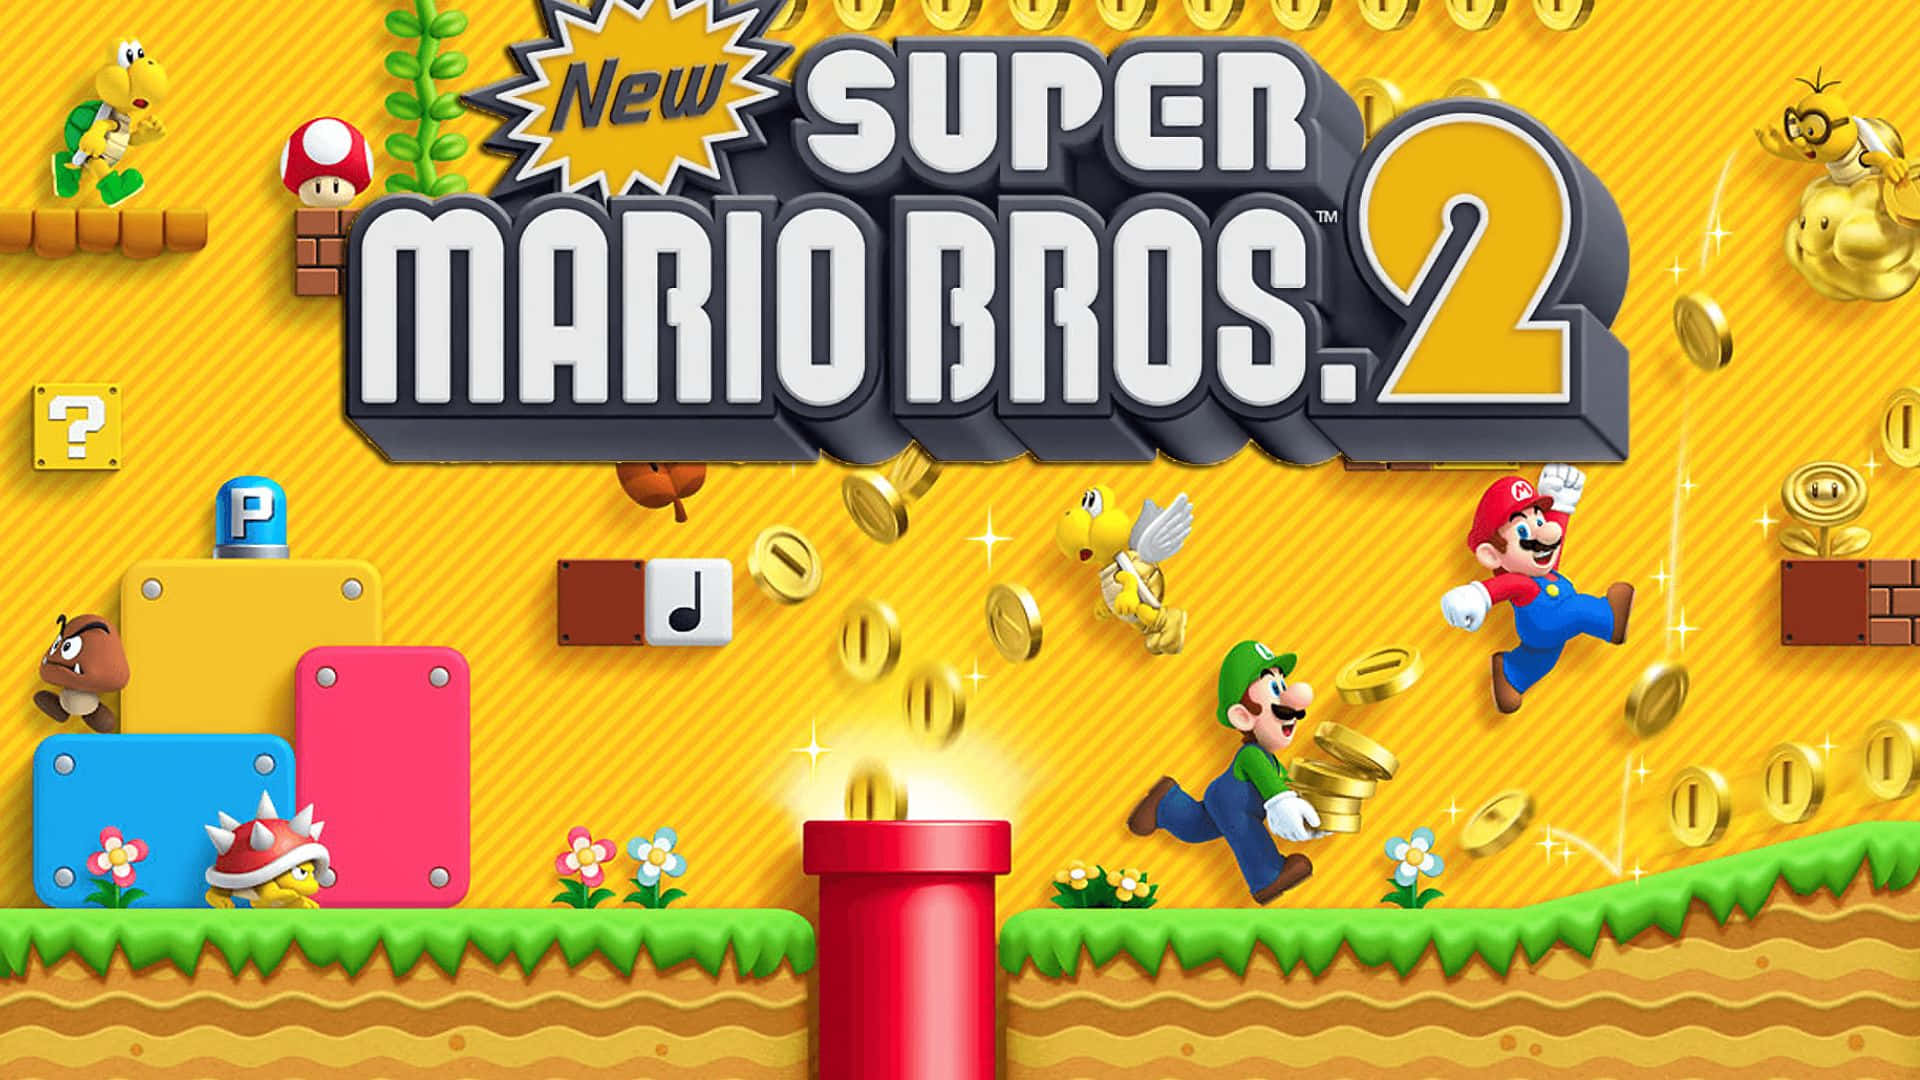 Super mario bros. New super Mario Bros 2 Nintendo 3ds. Супер Марио БРОС 2 Нинтендо. New super Mario Bros.ДС. New super Mario Bros 2 DS.